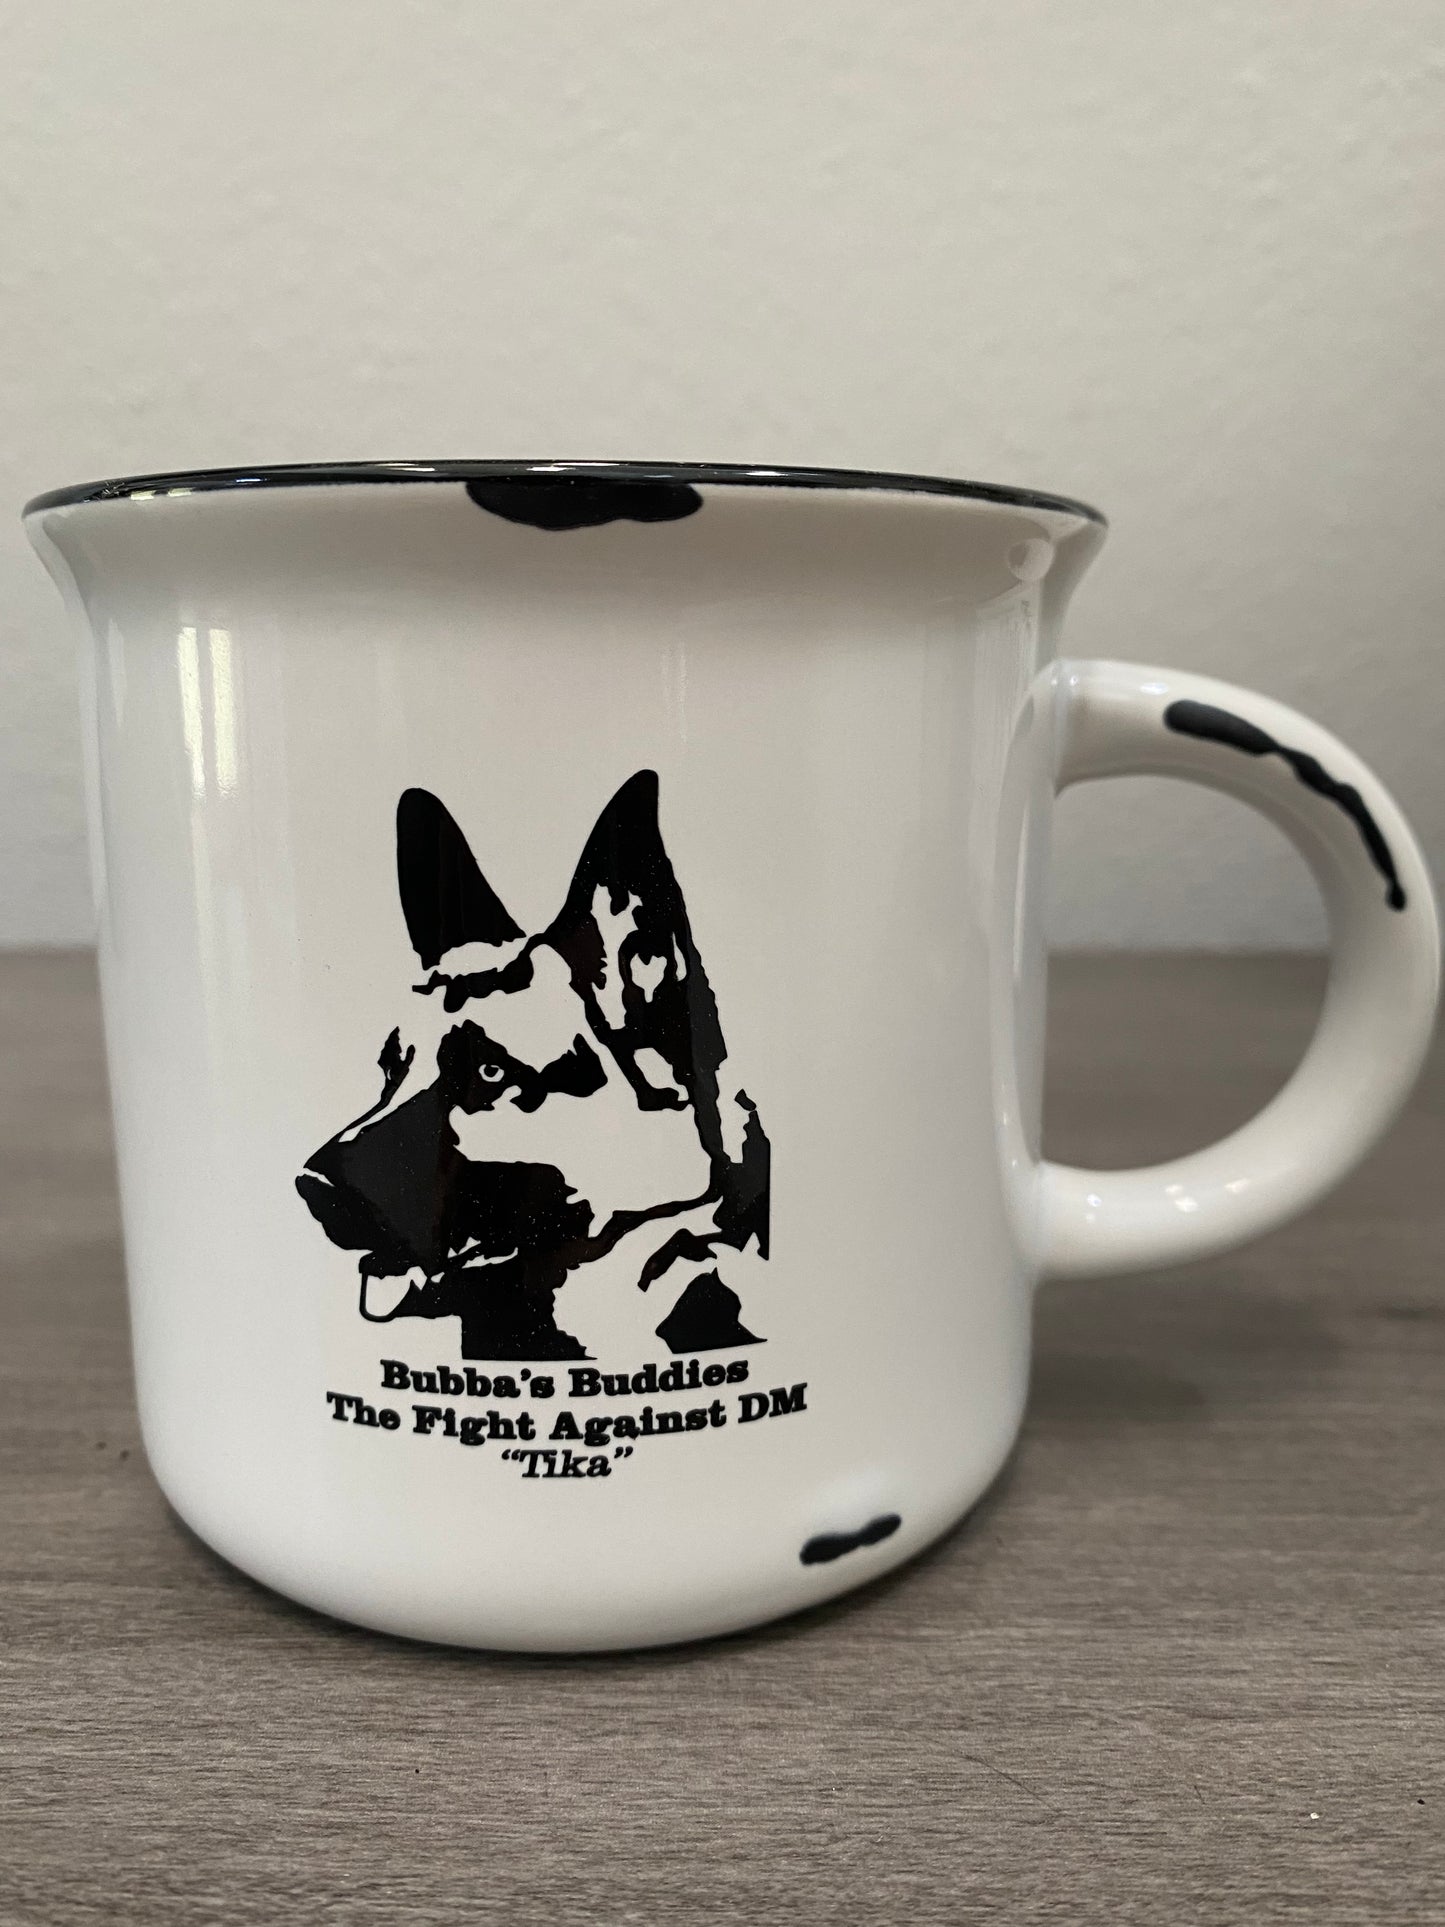 German Shepherd (Tika) "The Fight Against DM" Coffee Mug